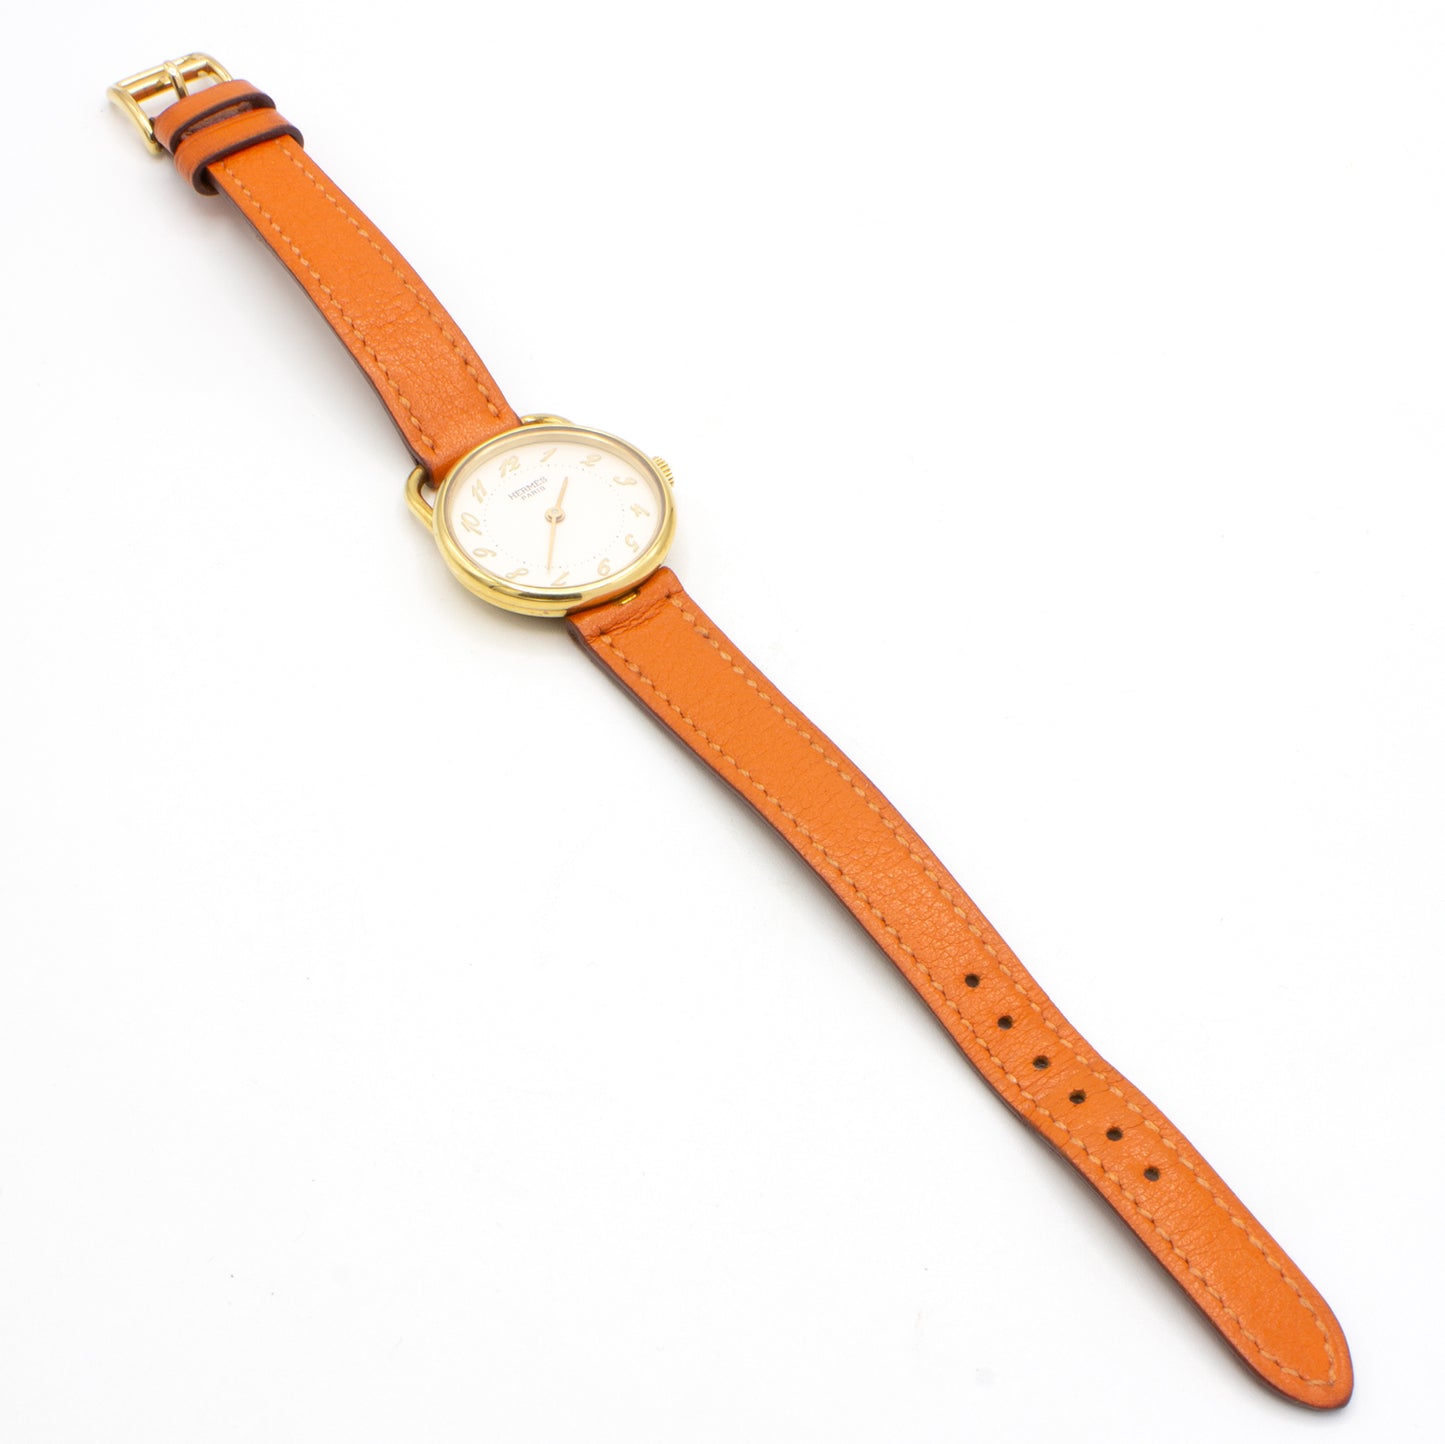 Hermès Arceau 25mm 18K watch